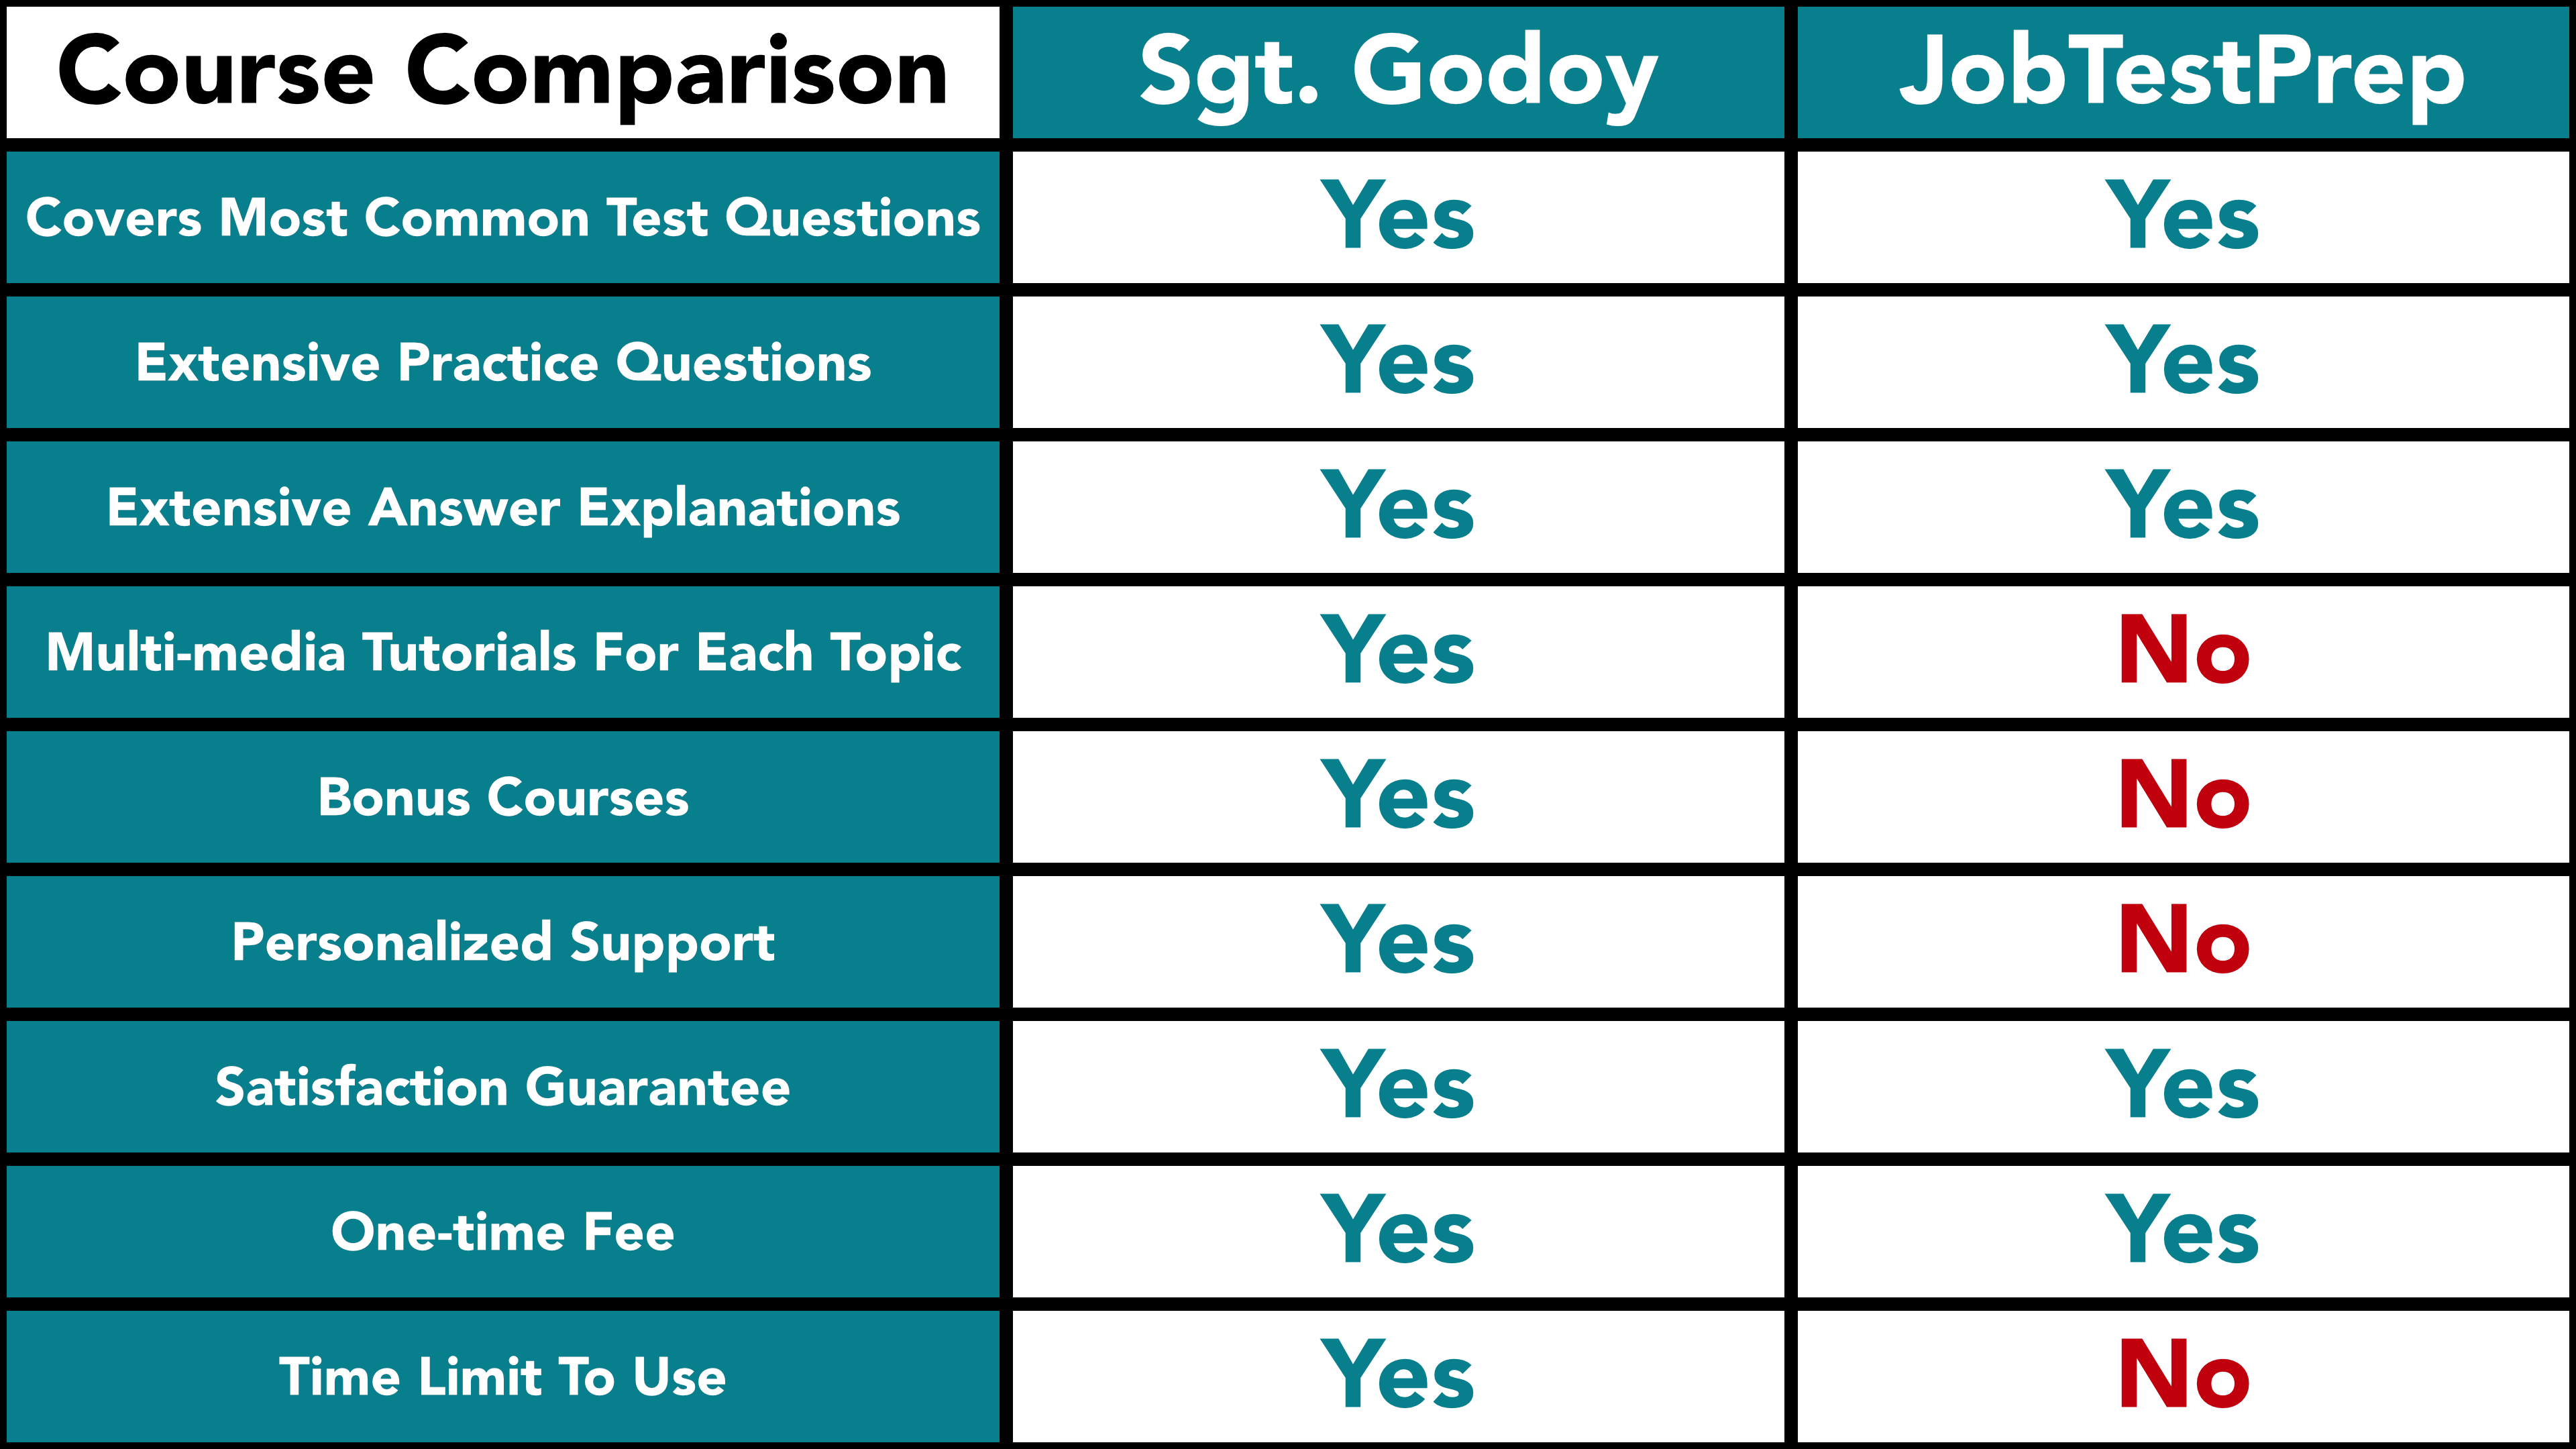 Table comparing Sgt. Godoy and JobTestPrep